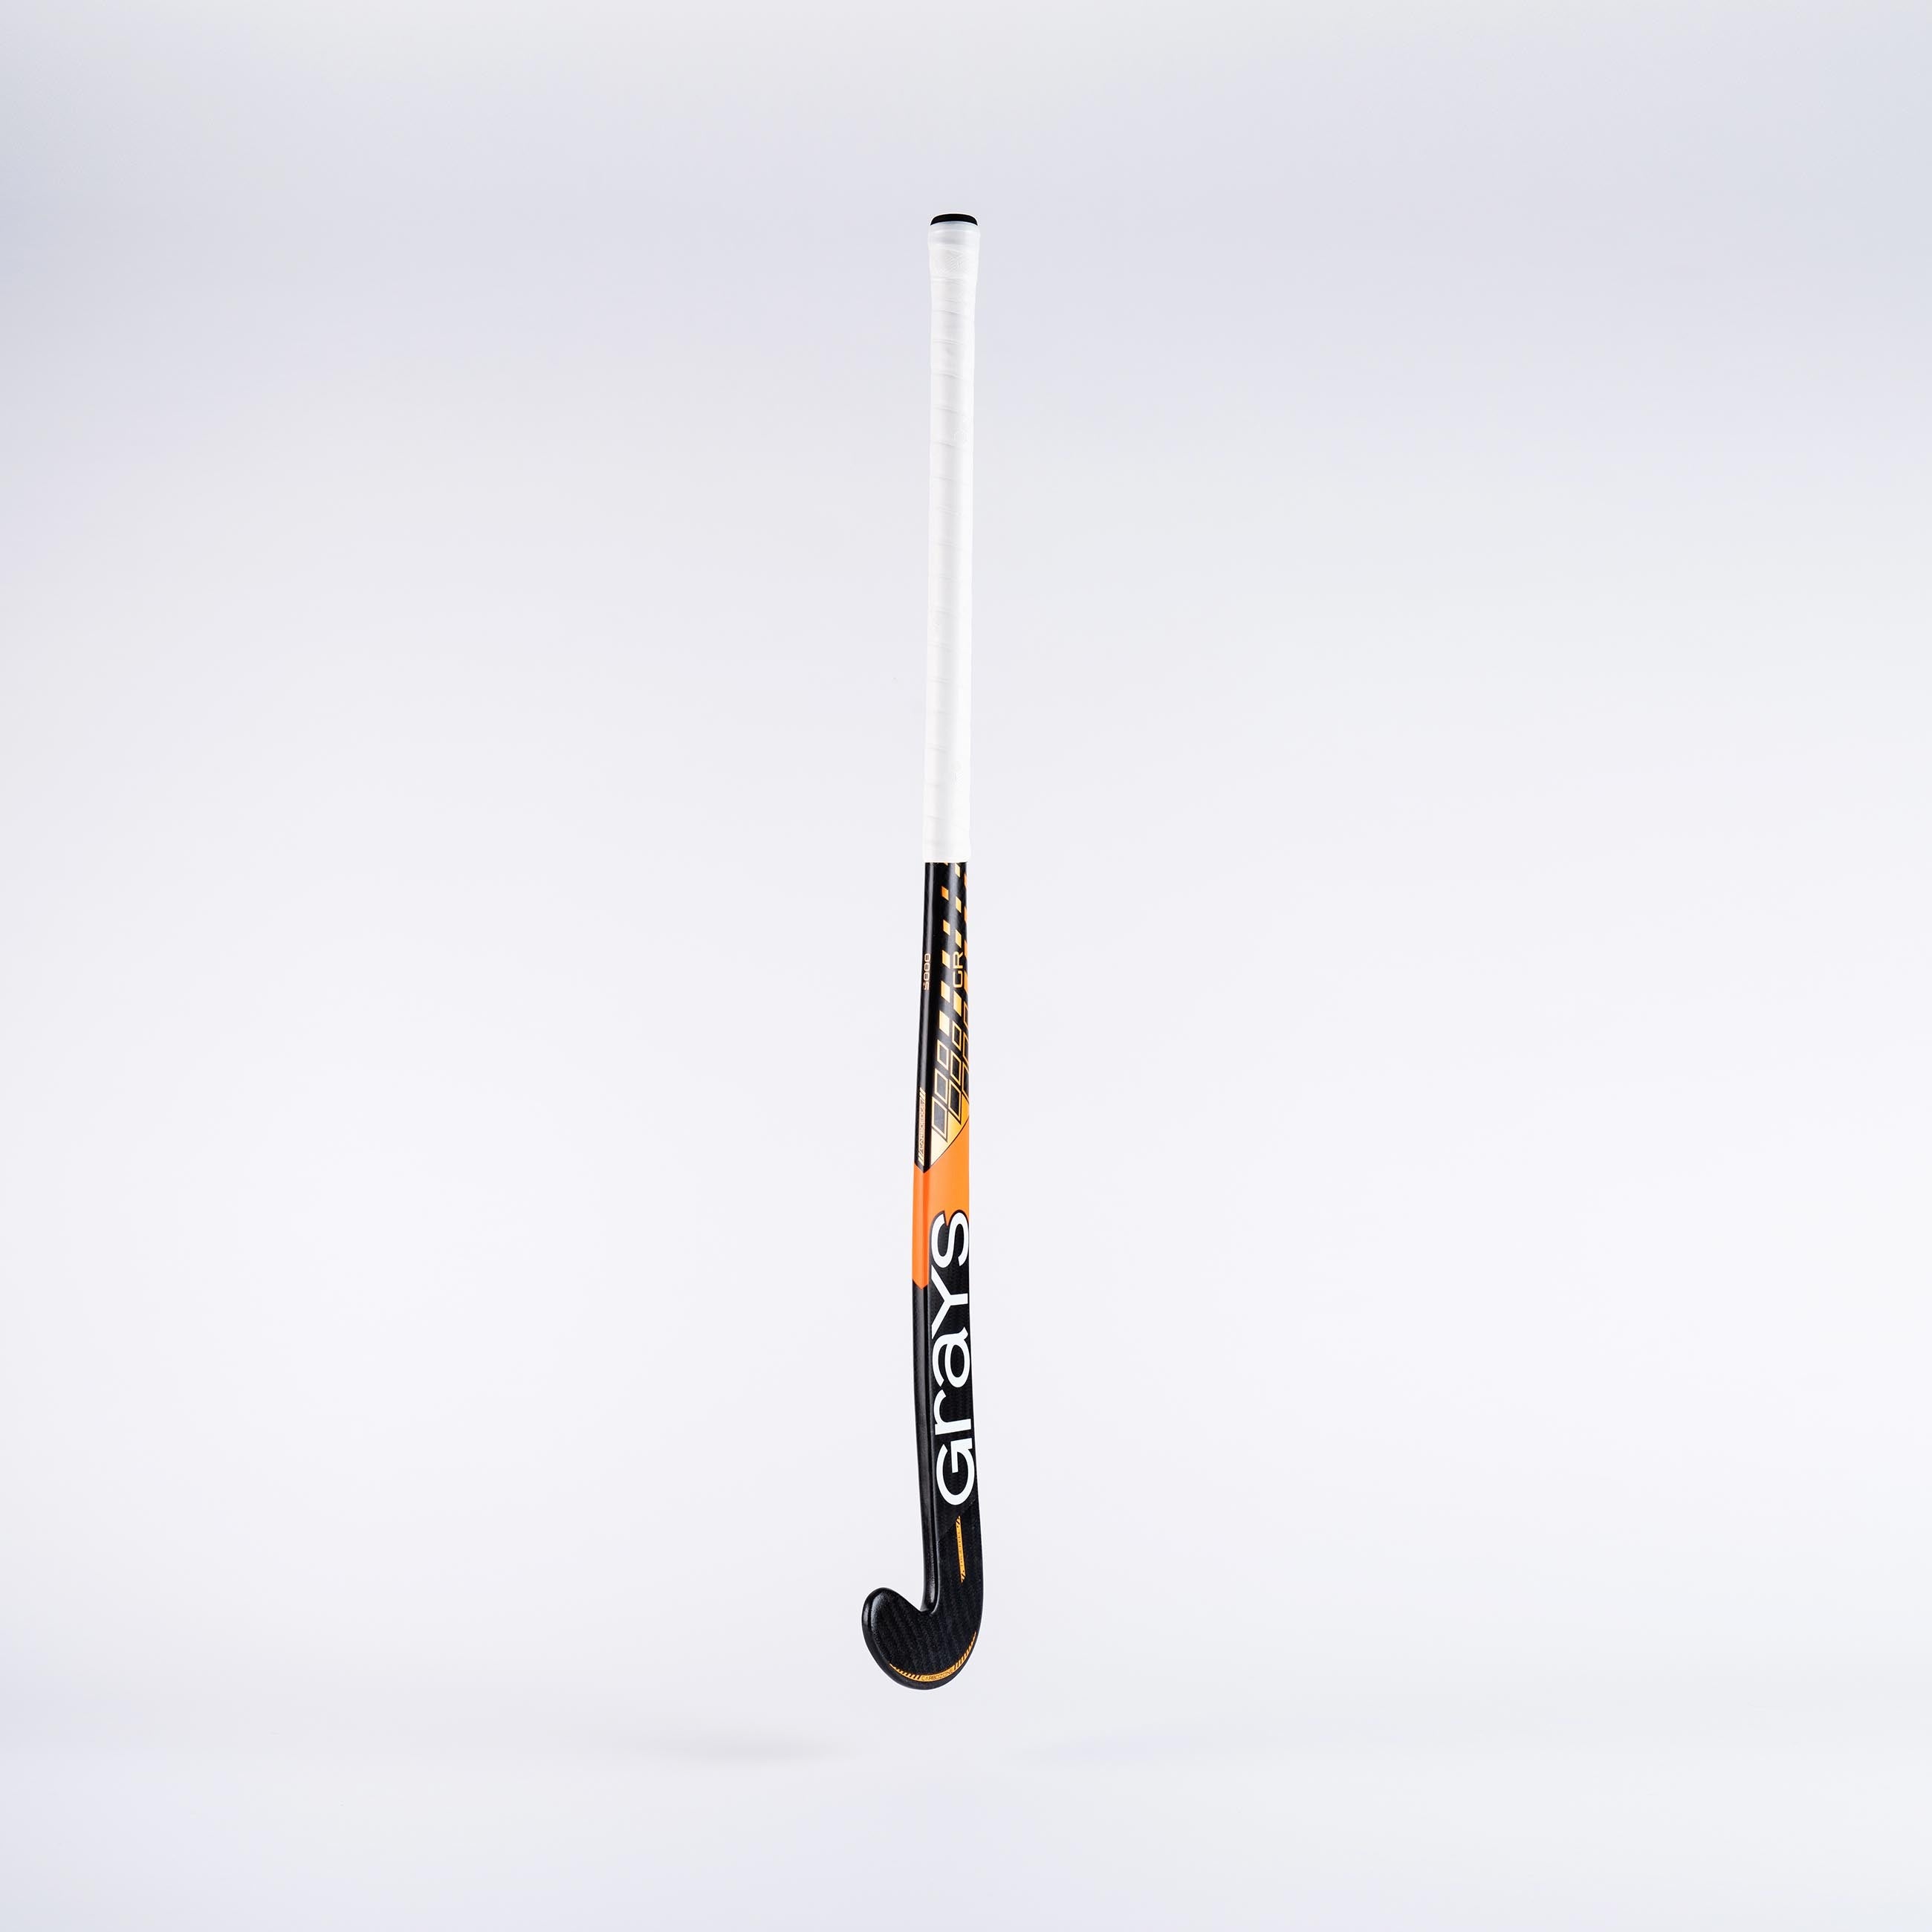 HABR23Composite Sticks GR5000 Midbow Micro 45 Black & Orange, 2 Angle